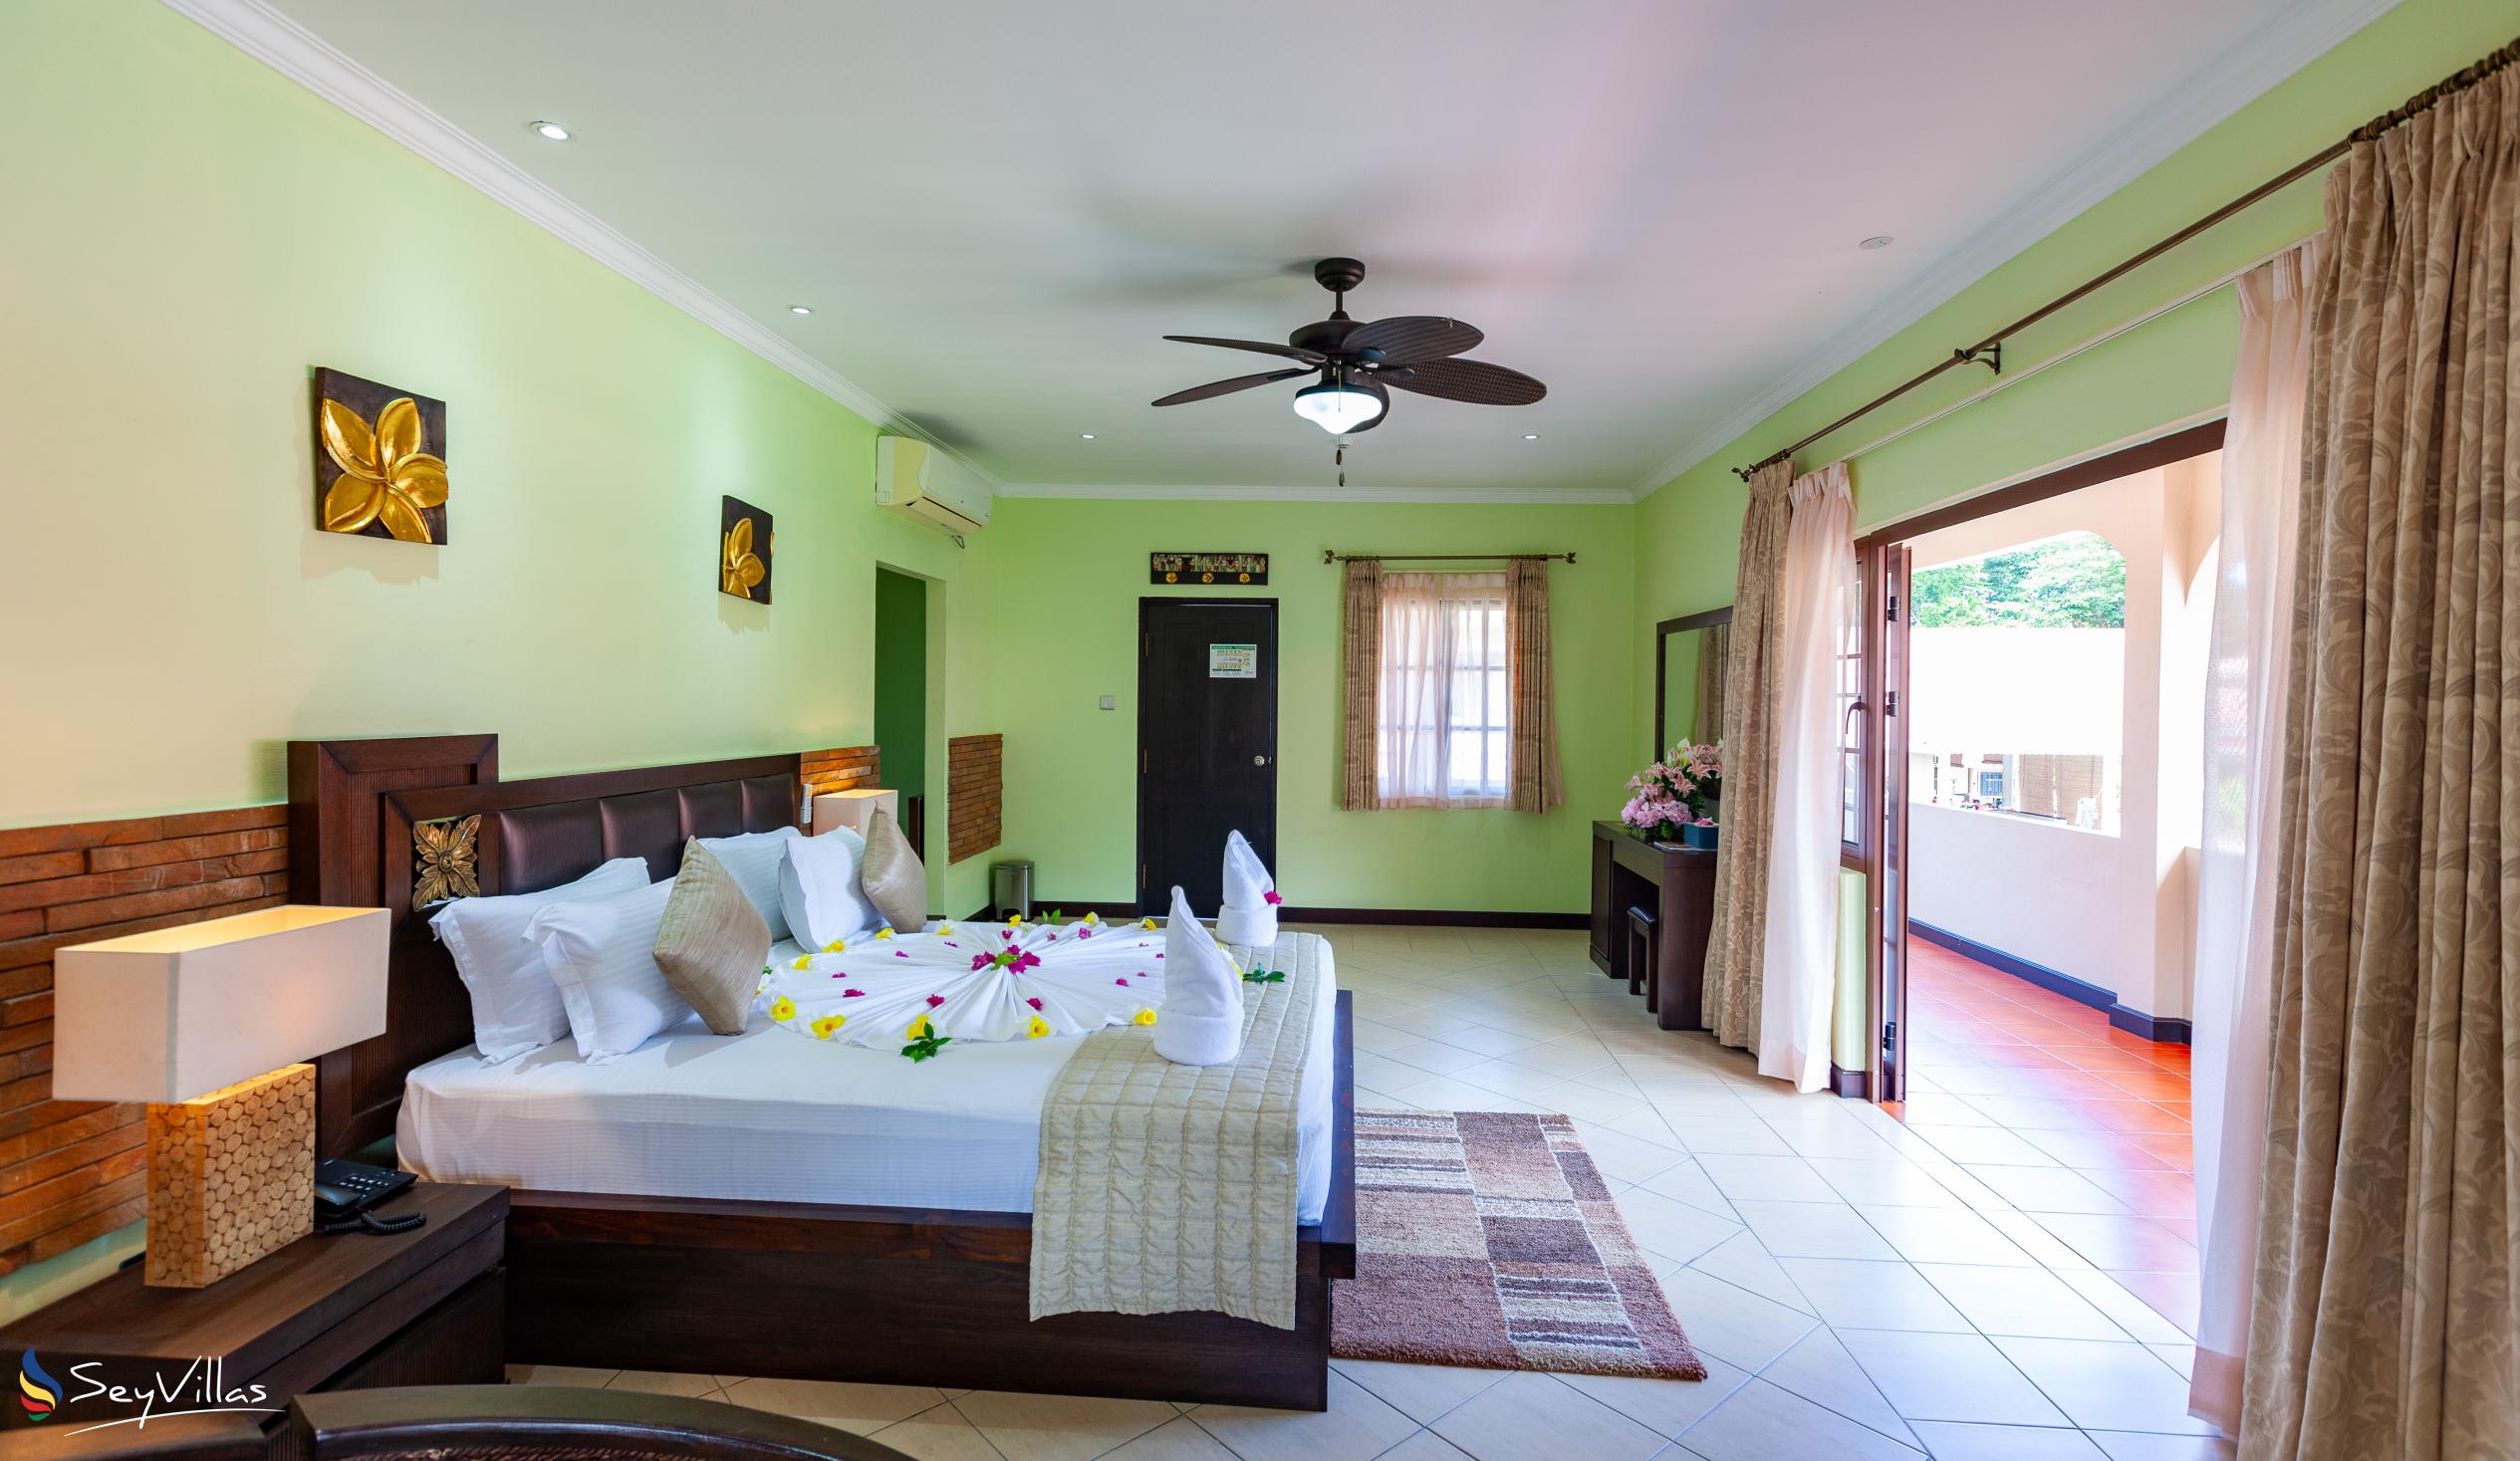 Photo 59: Oasis Hotel, Restaurant & Spa - Deluxe Room - Praslin (Seychelles)